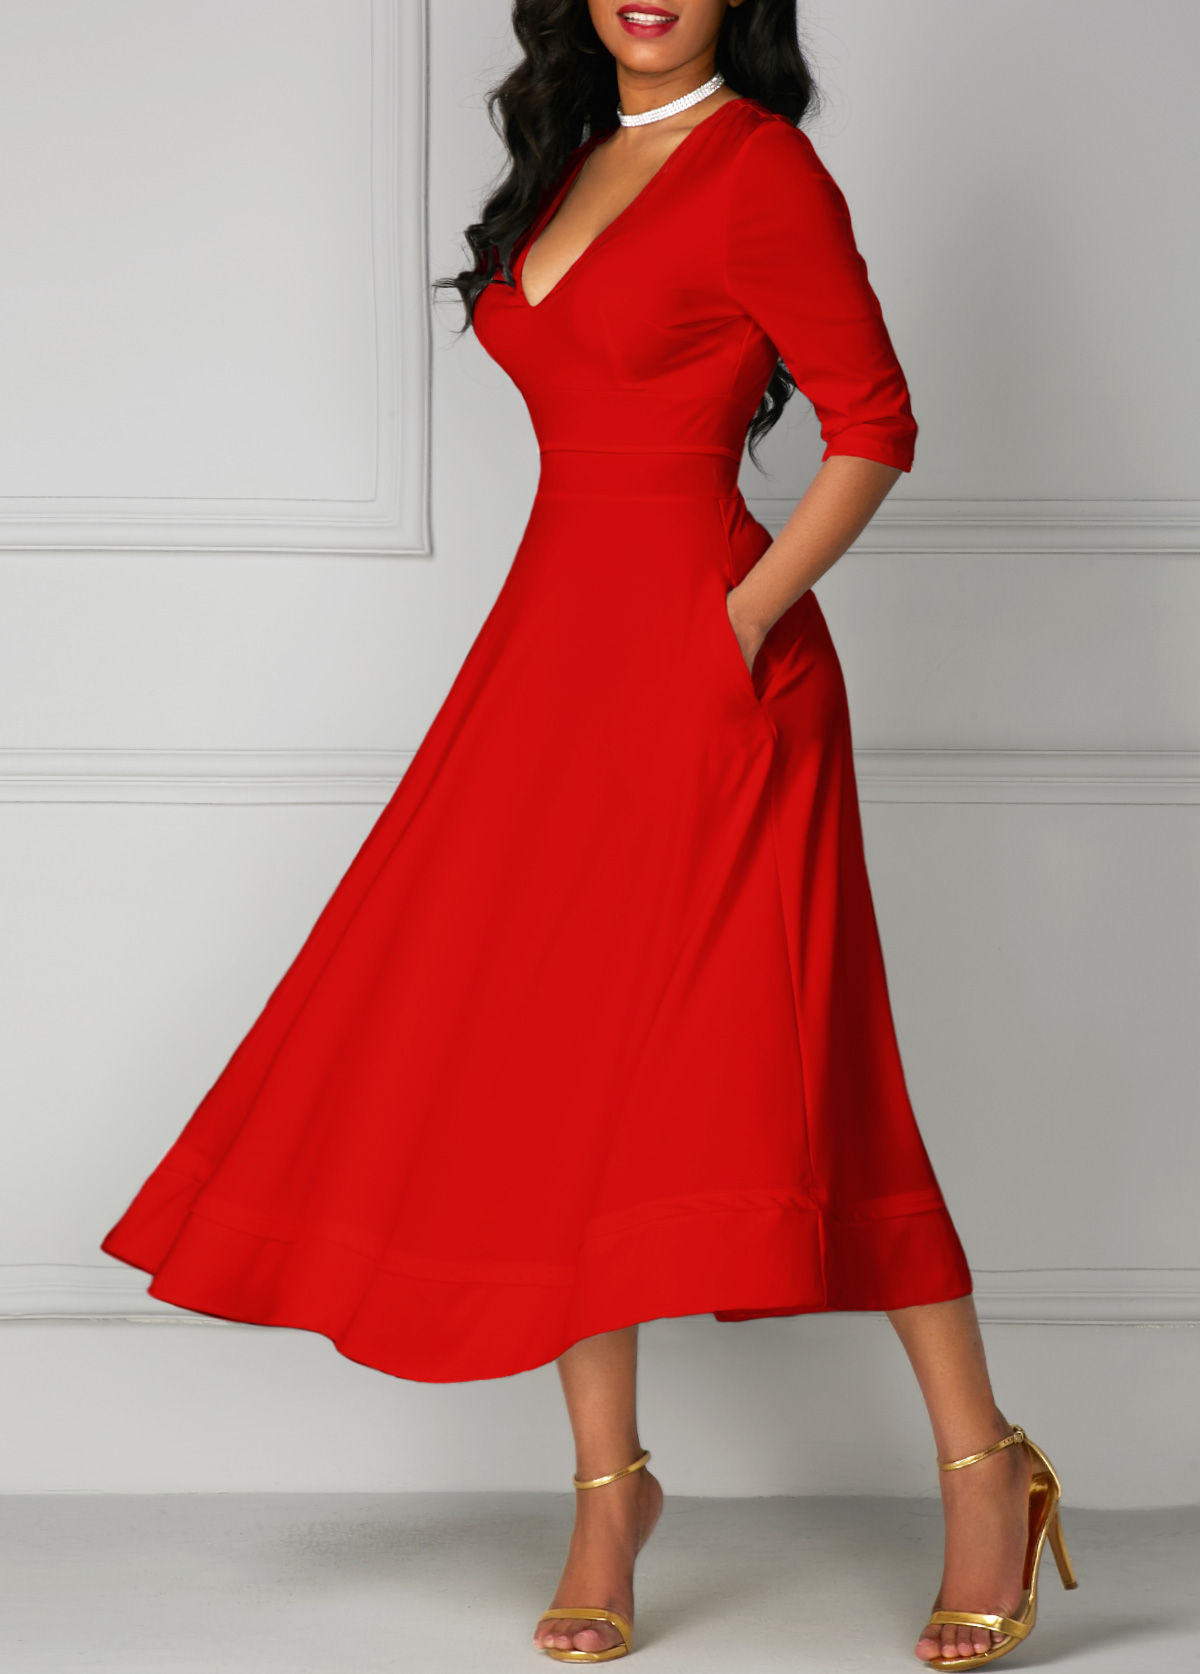 Red Dress v neck high waist half sleeve red dress CIODTJR